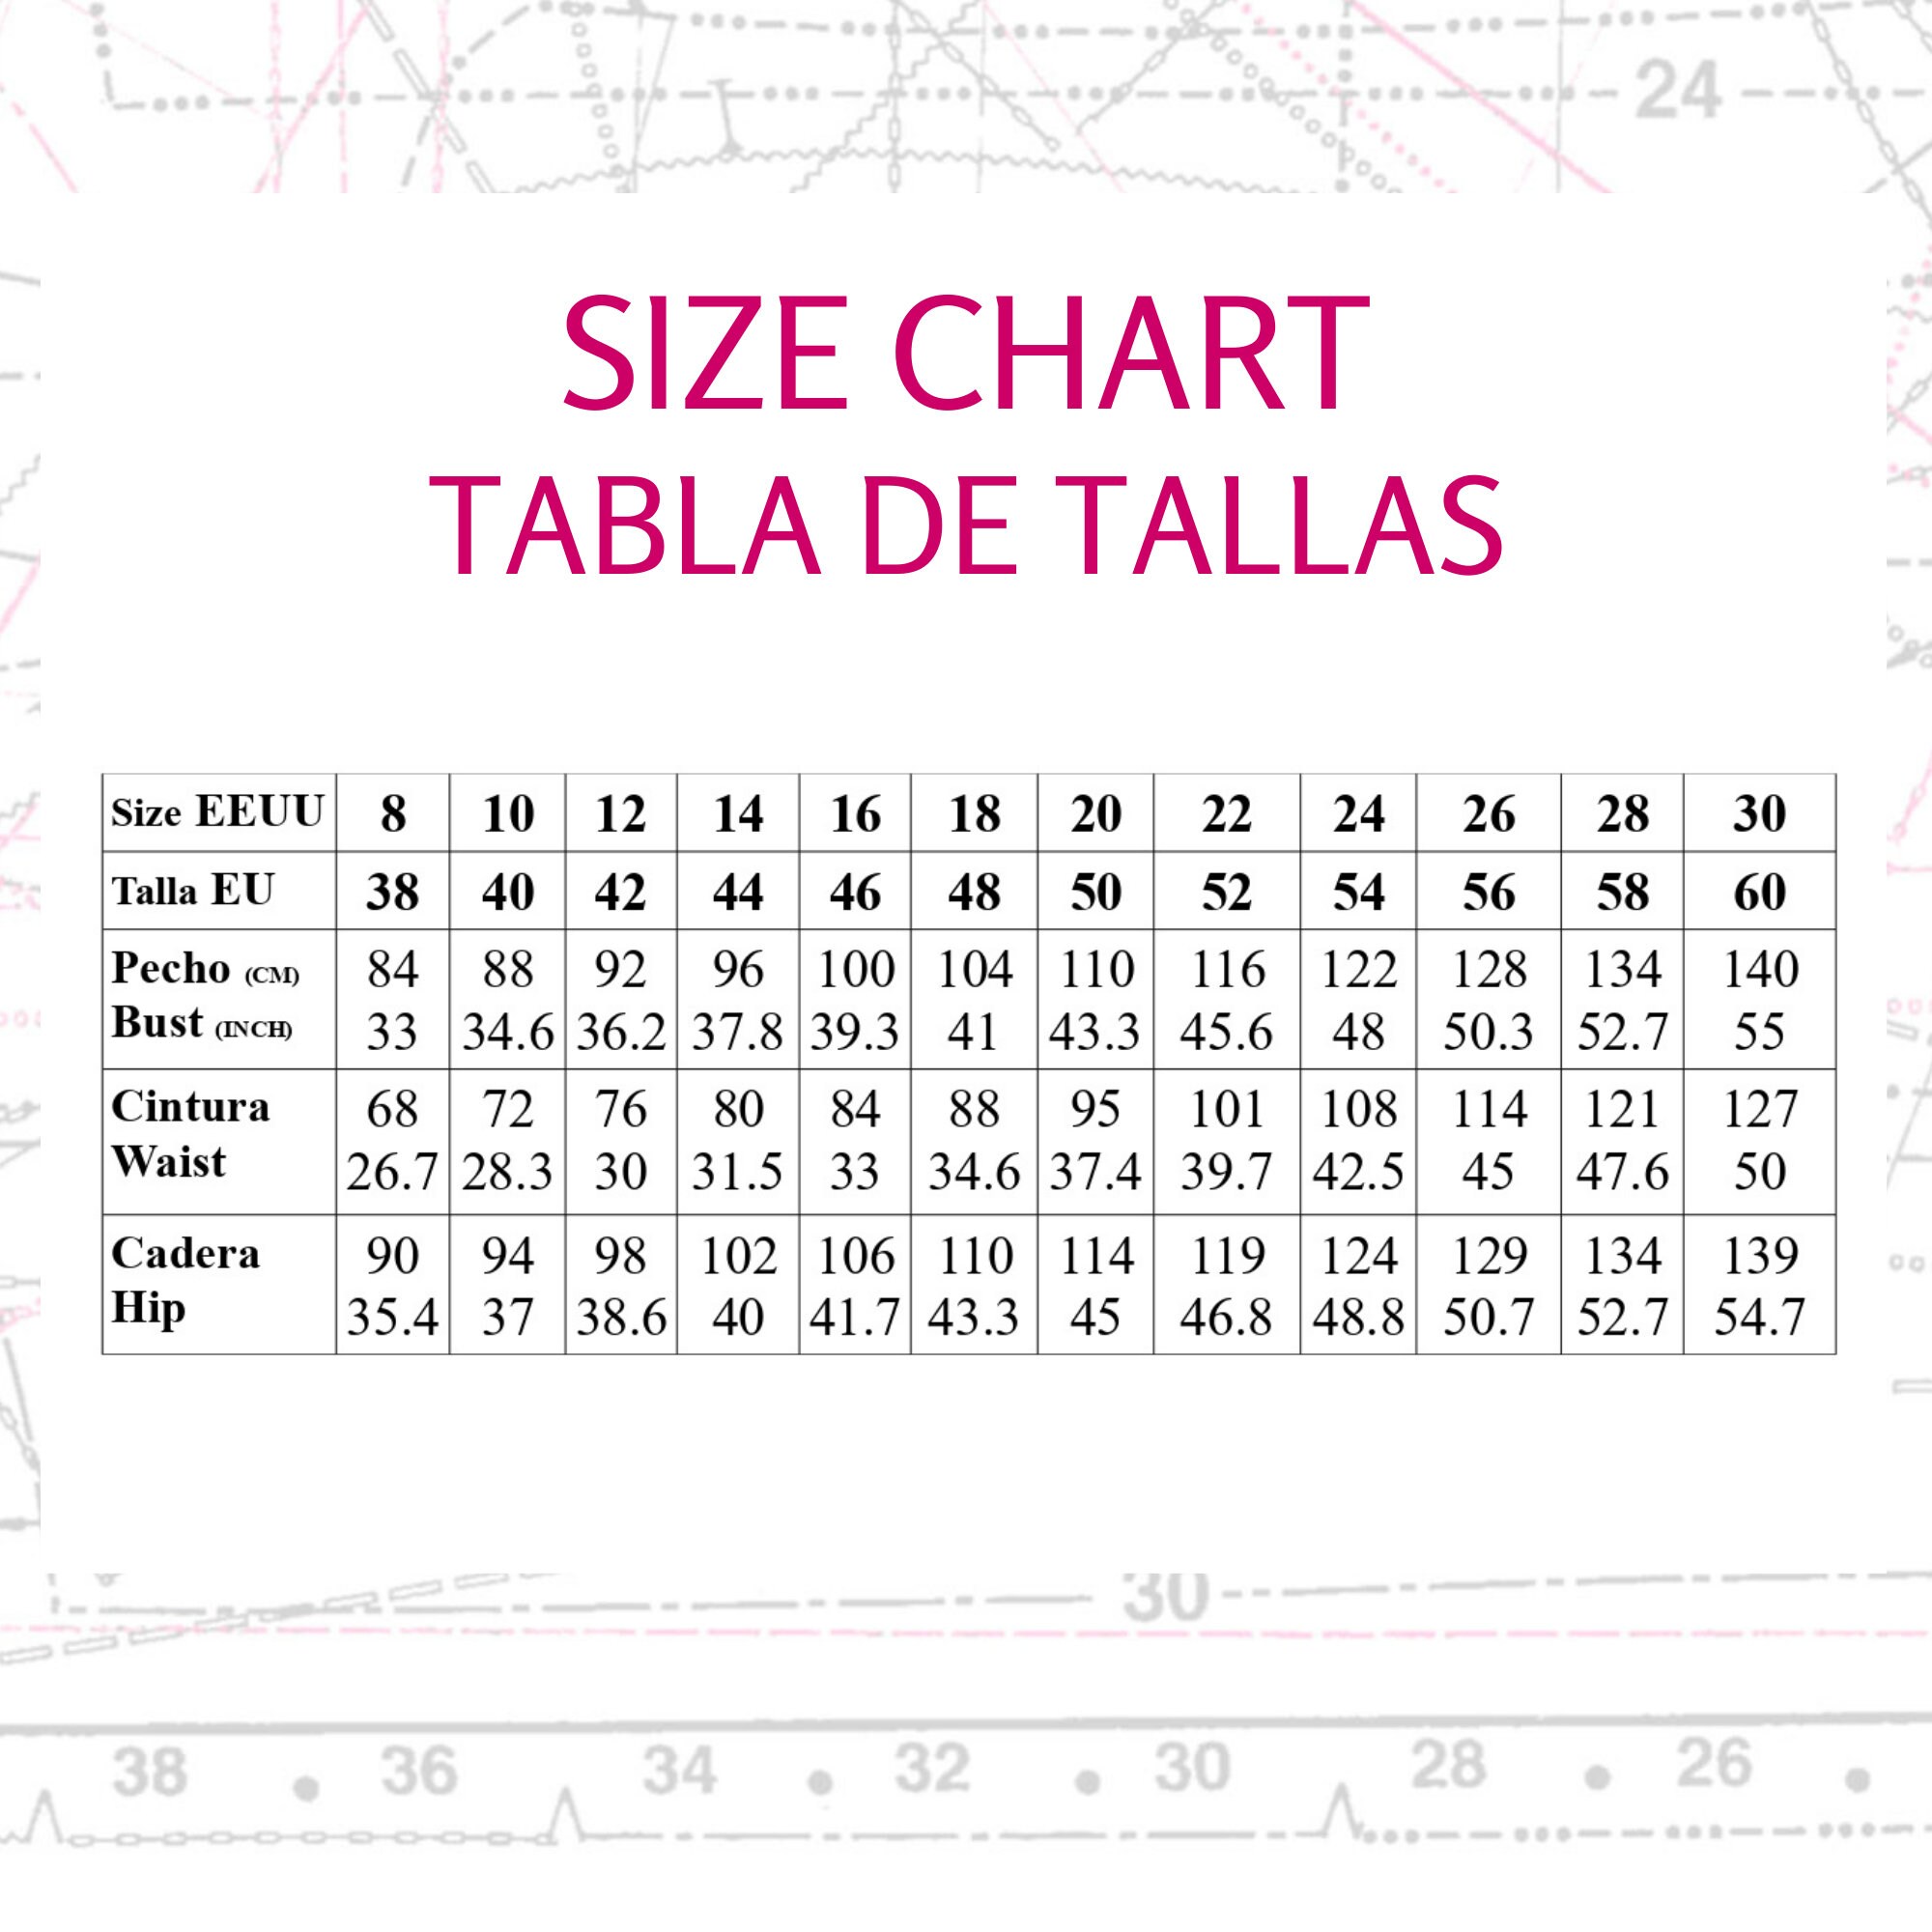 Skirt Sewing Pattern Bundle, PDF Sewing Pattern, Plus Size Patterns ...